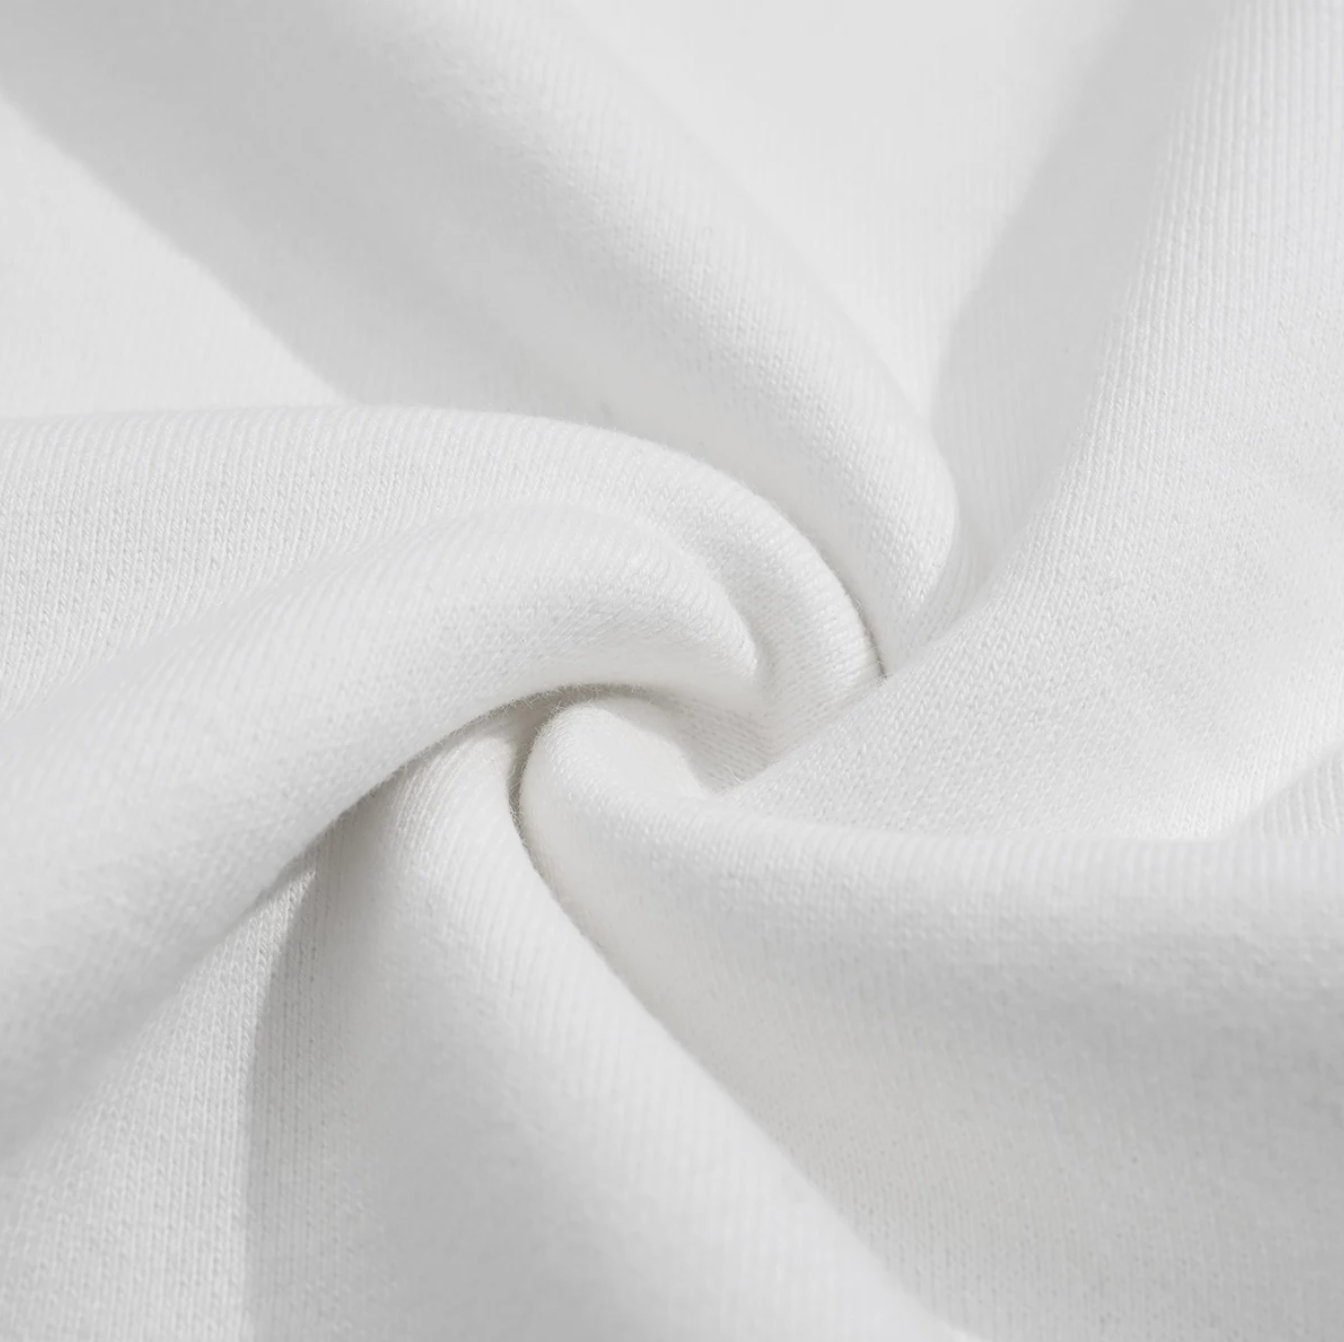 IN TECHNO WE TRUST (BACK PRINT) - Unisex Fleece-lined Sweatshirt